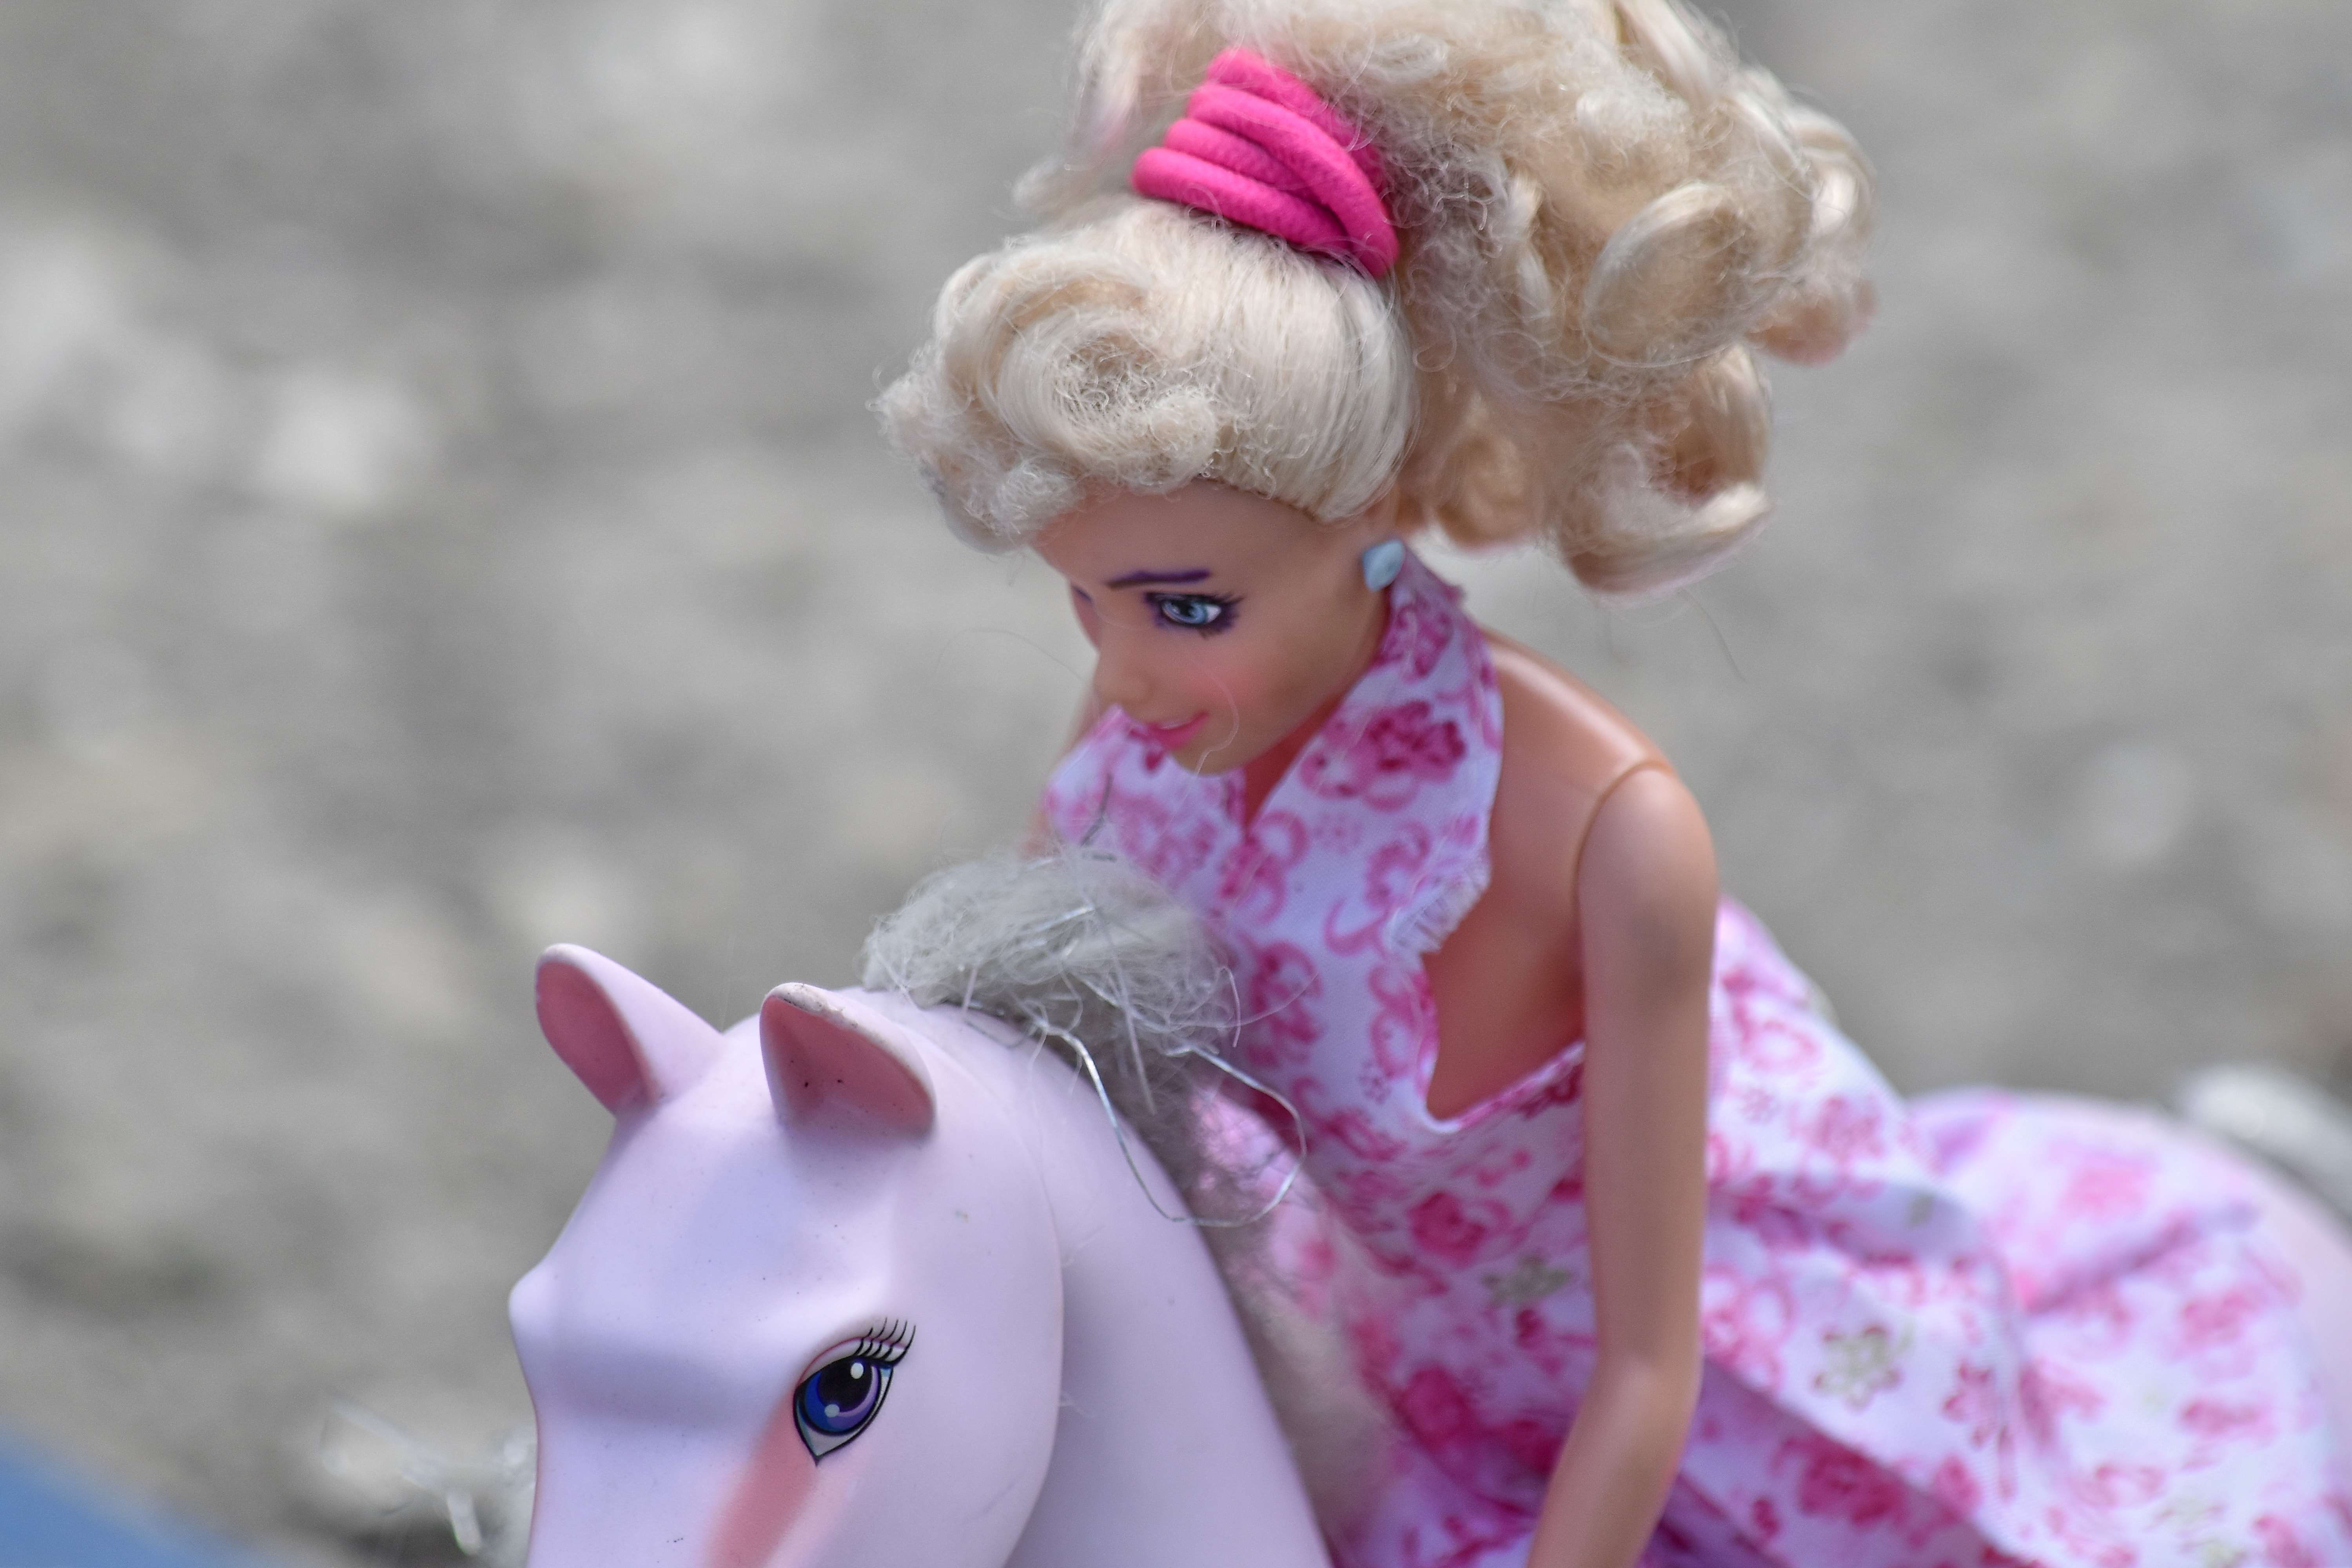 Girl rides doll